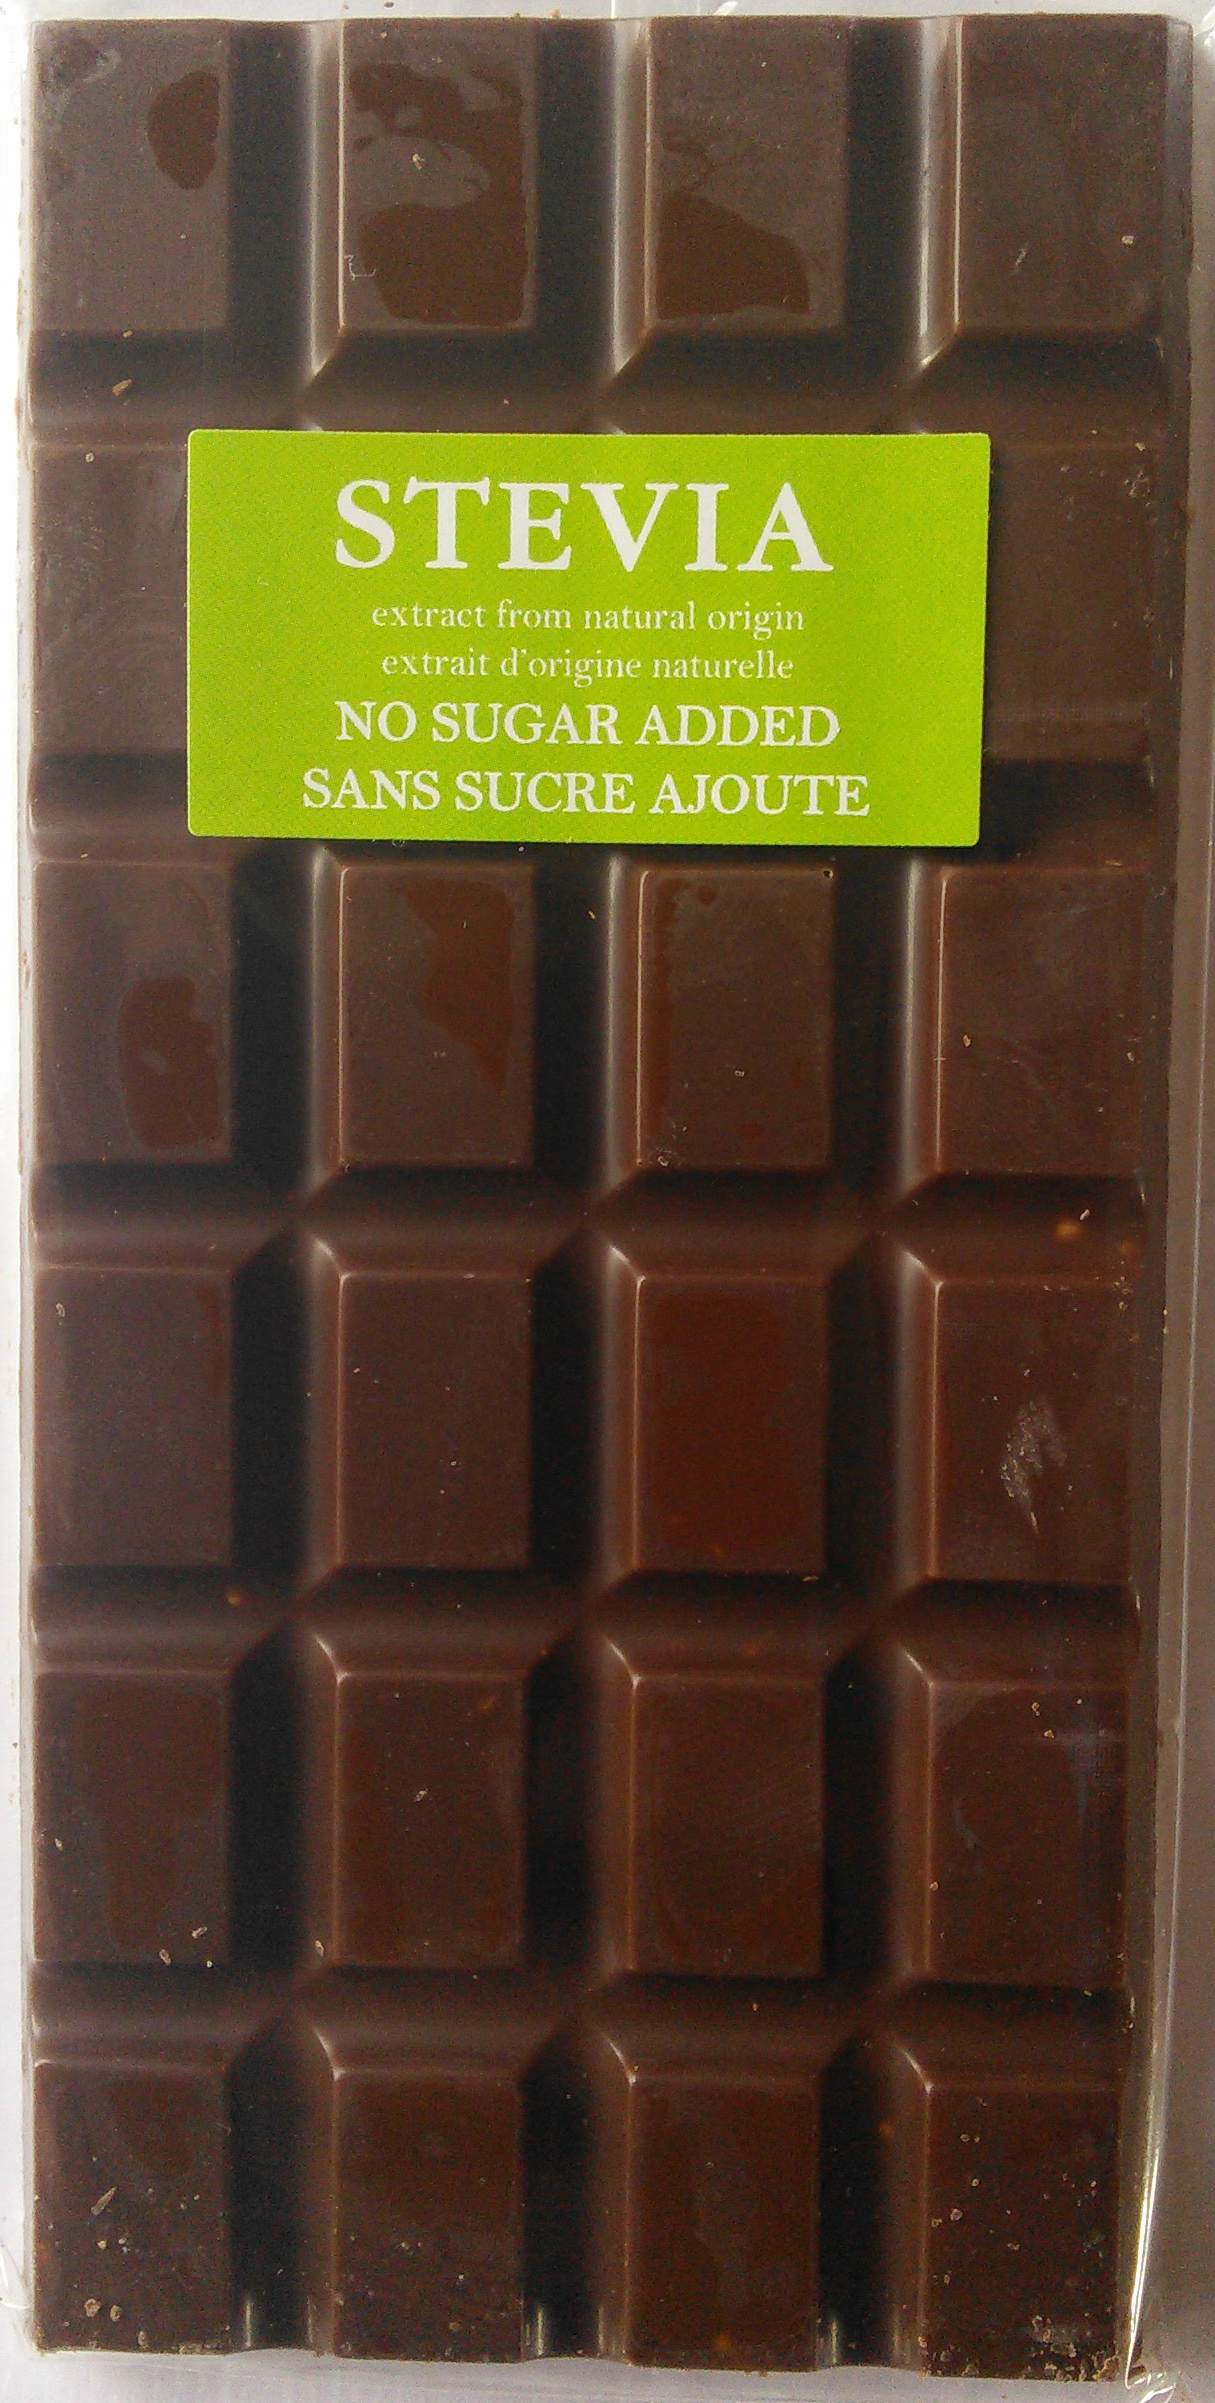 File:Stevia Chocolate.jpg Wikimedia Commons